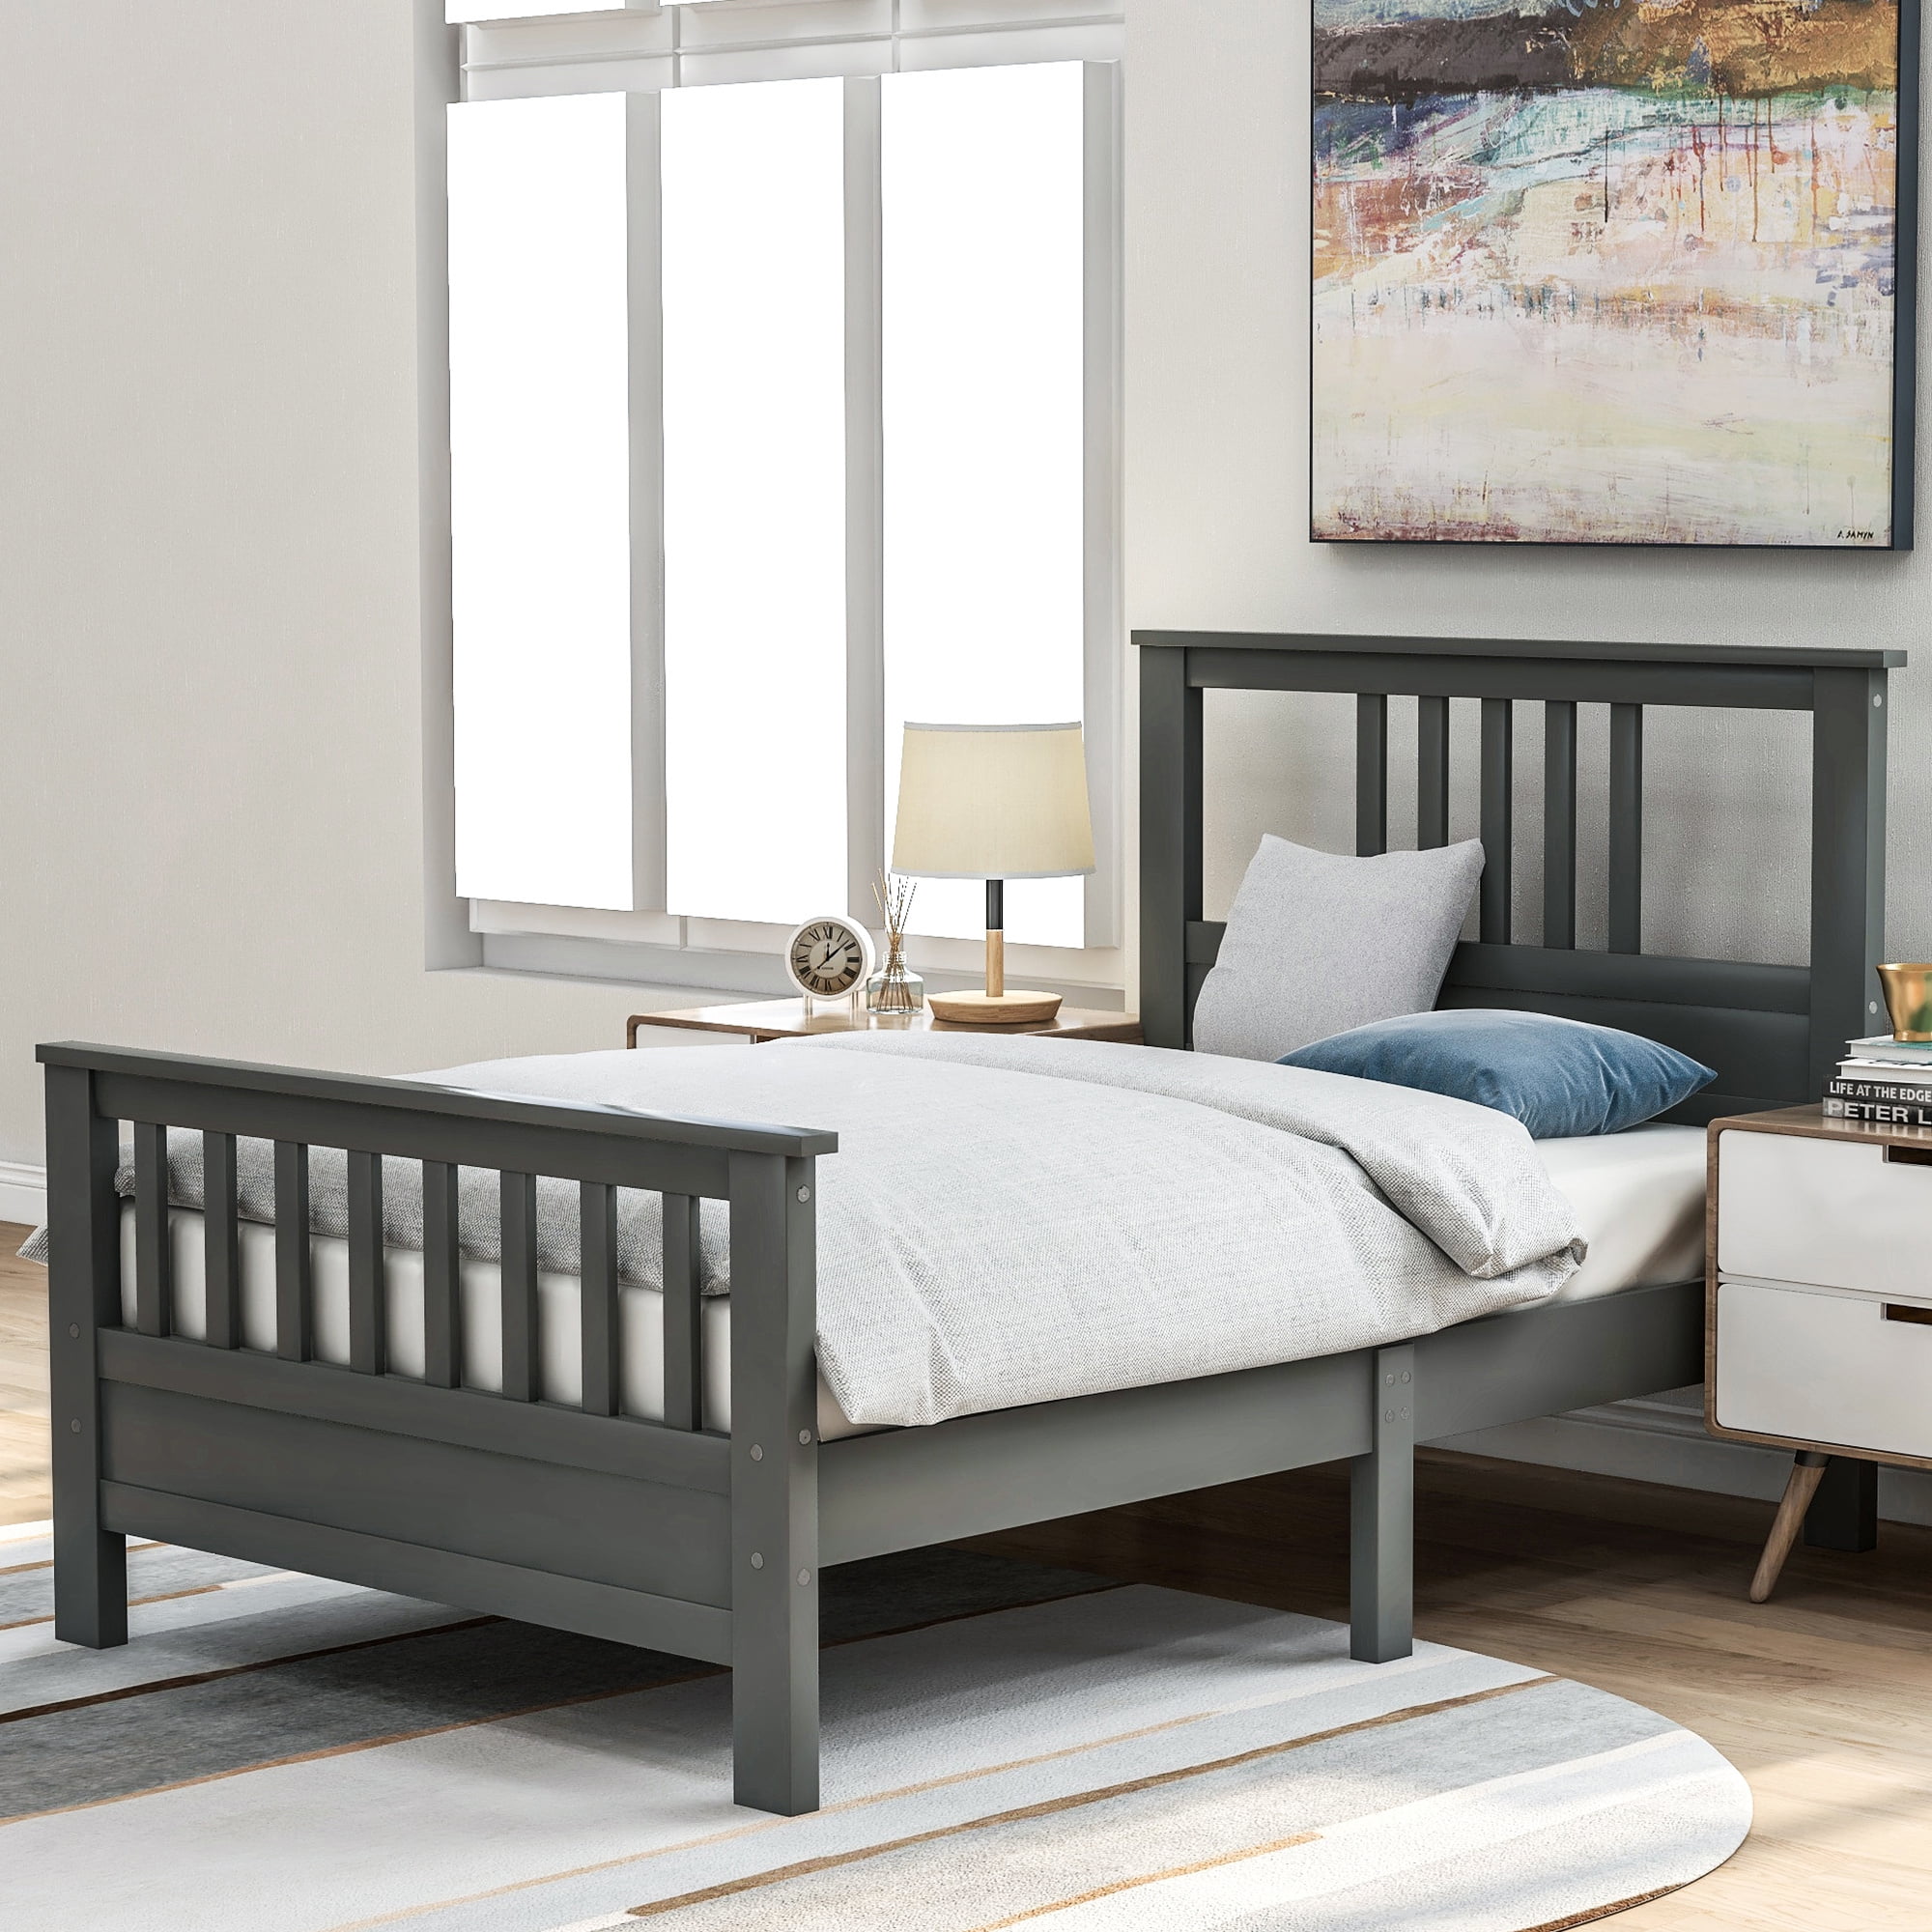 Details about   Twin/Full/Queen Wooden Bed Frame Mattress Platform Wood Slats Support Gray 